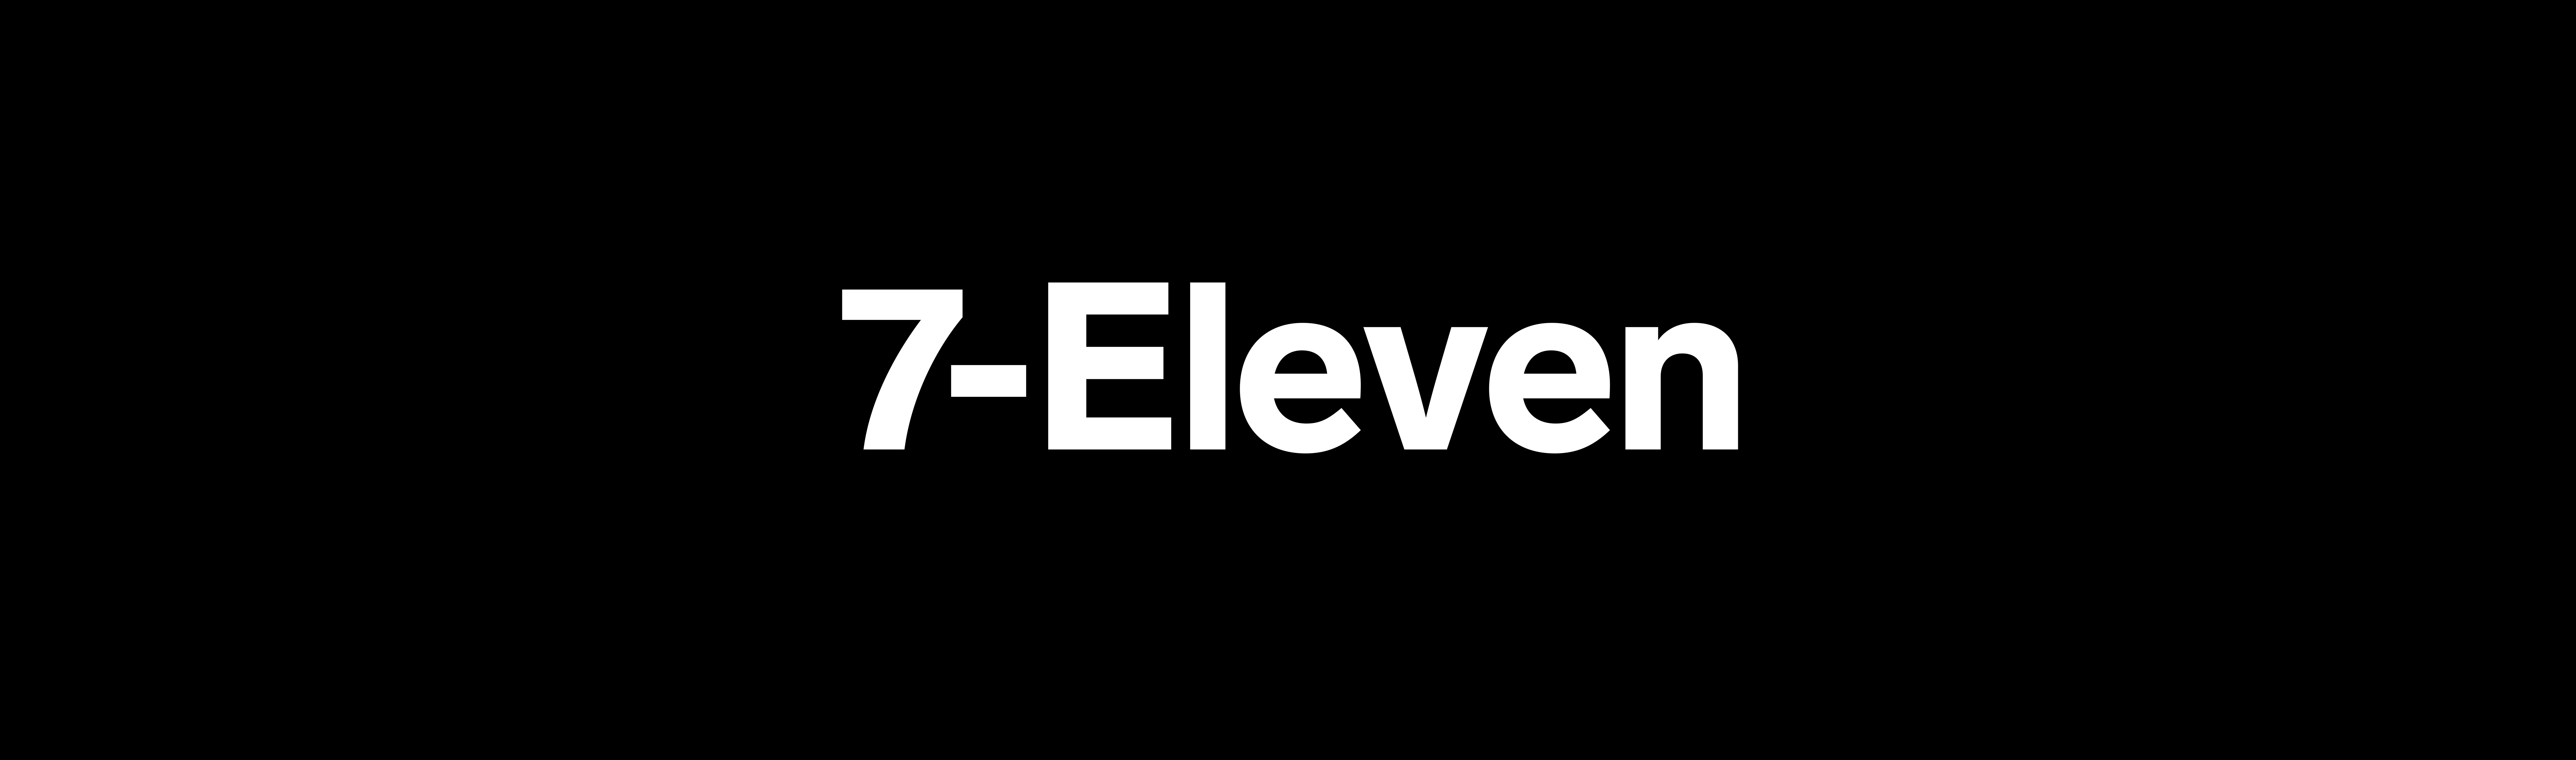 7Eleven_Logo